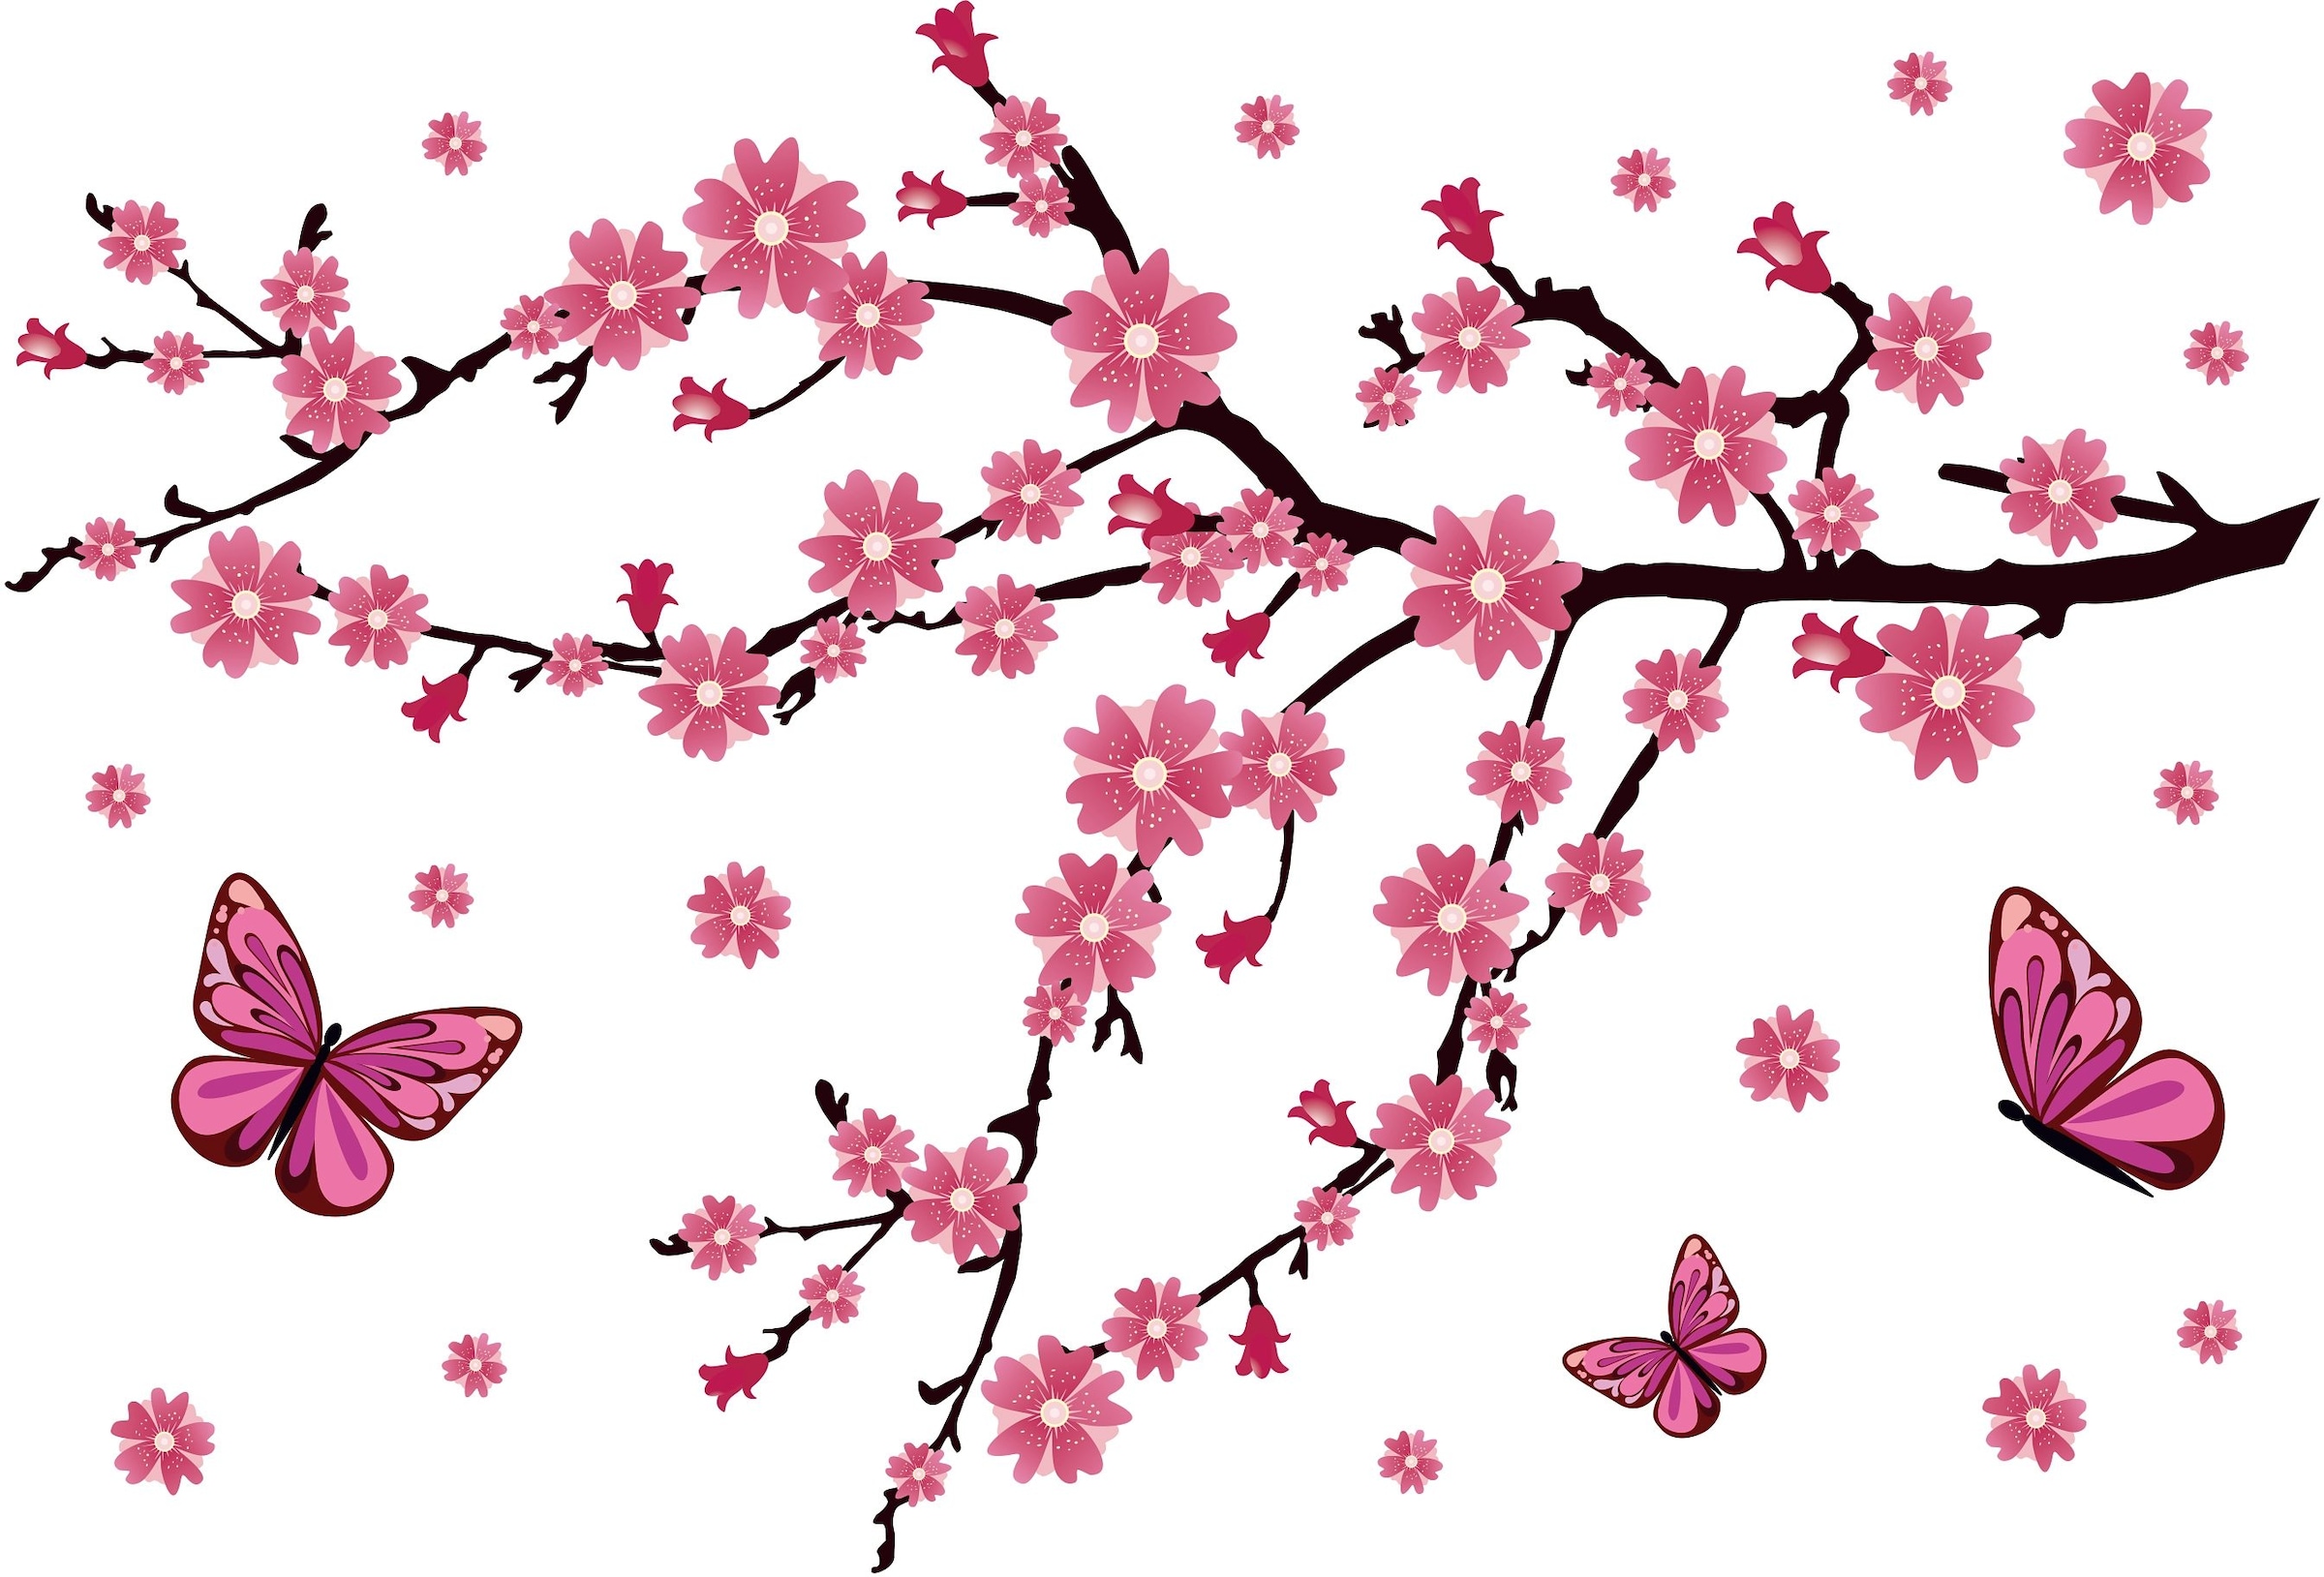 Wall-Art Wandtattoo »Kirschblüten mit Schmetterlingen« bequem bestellen